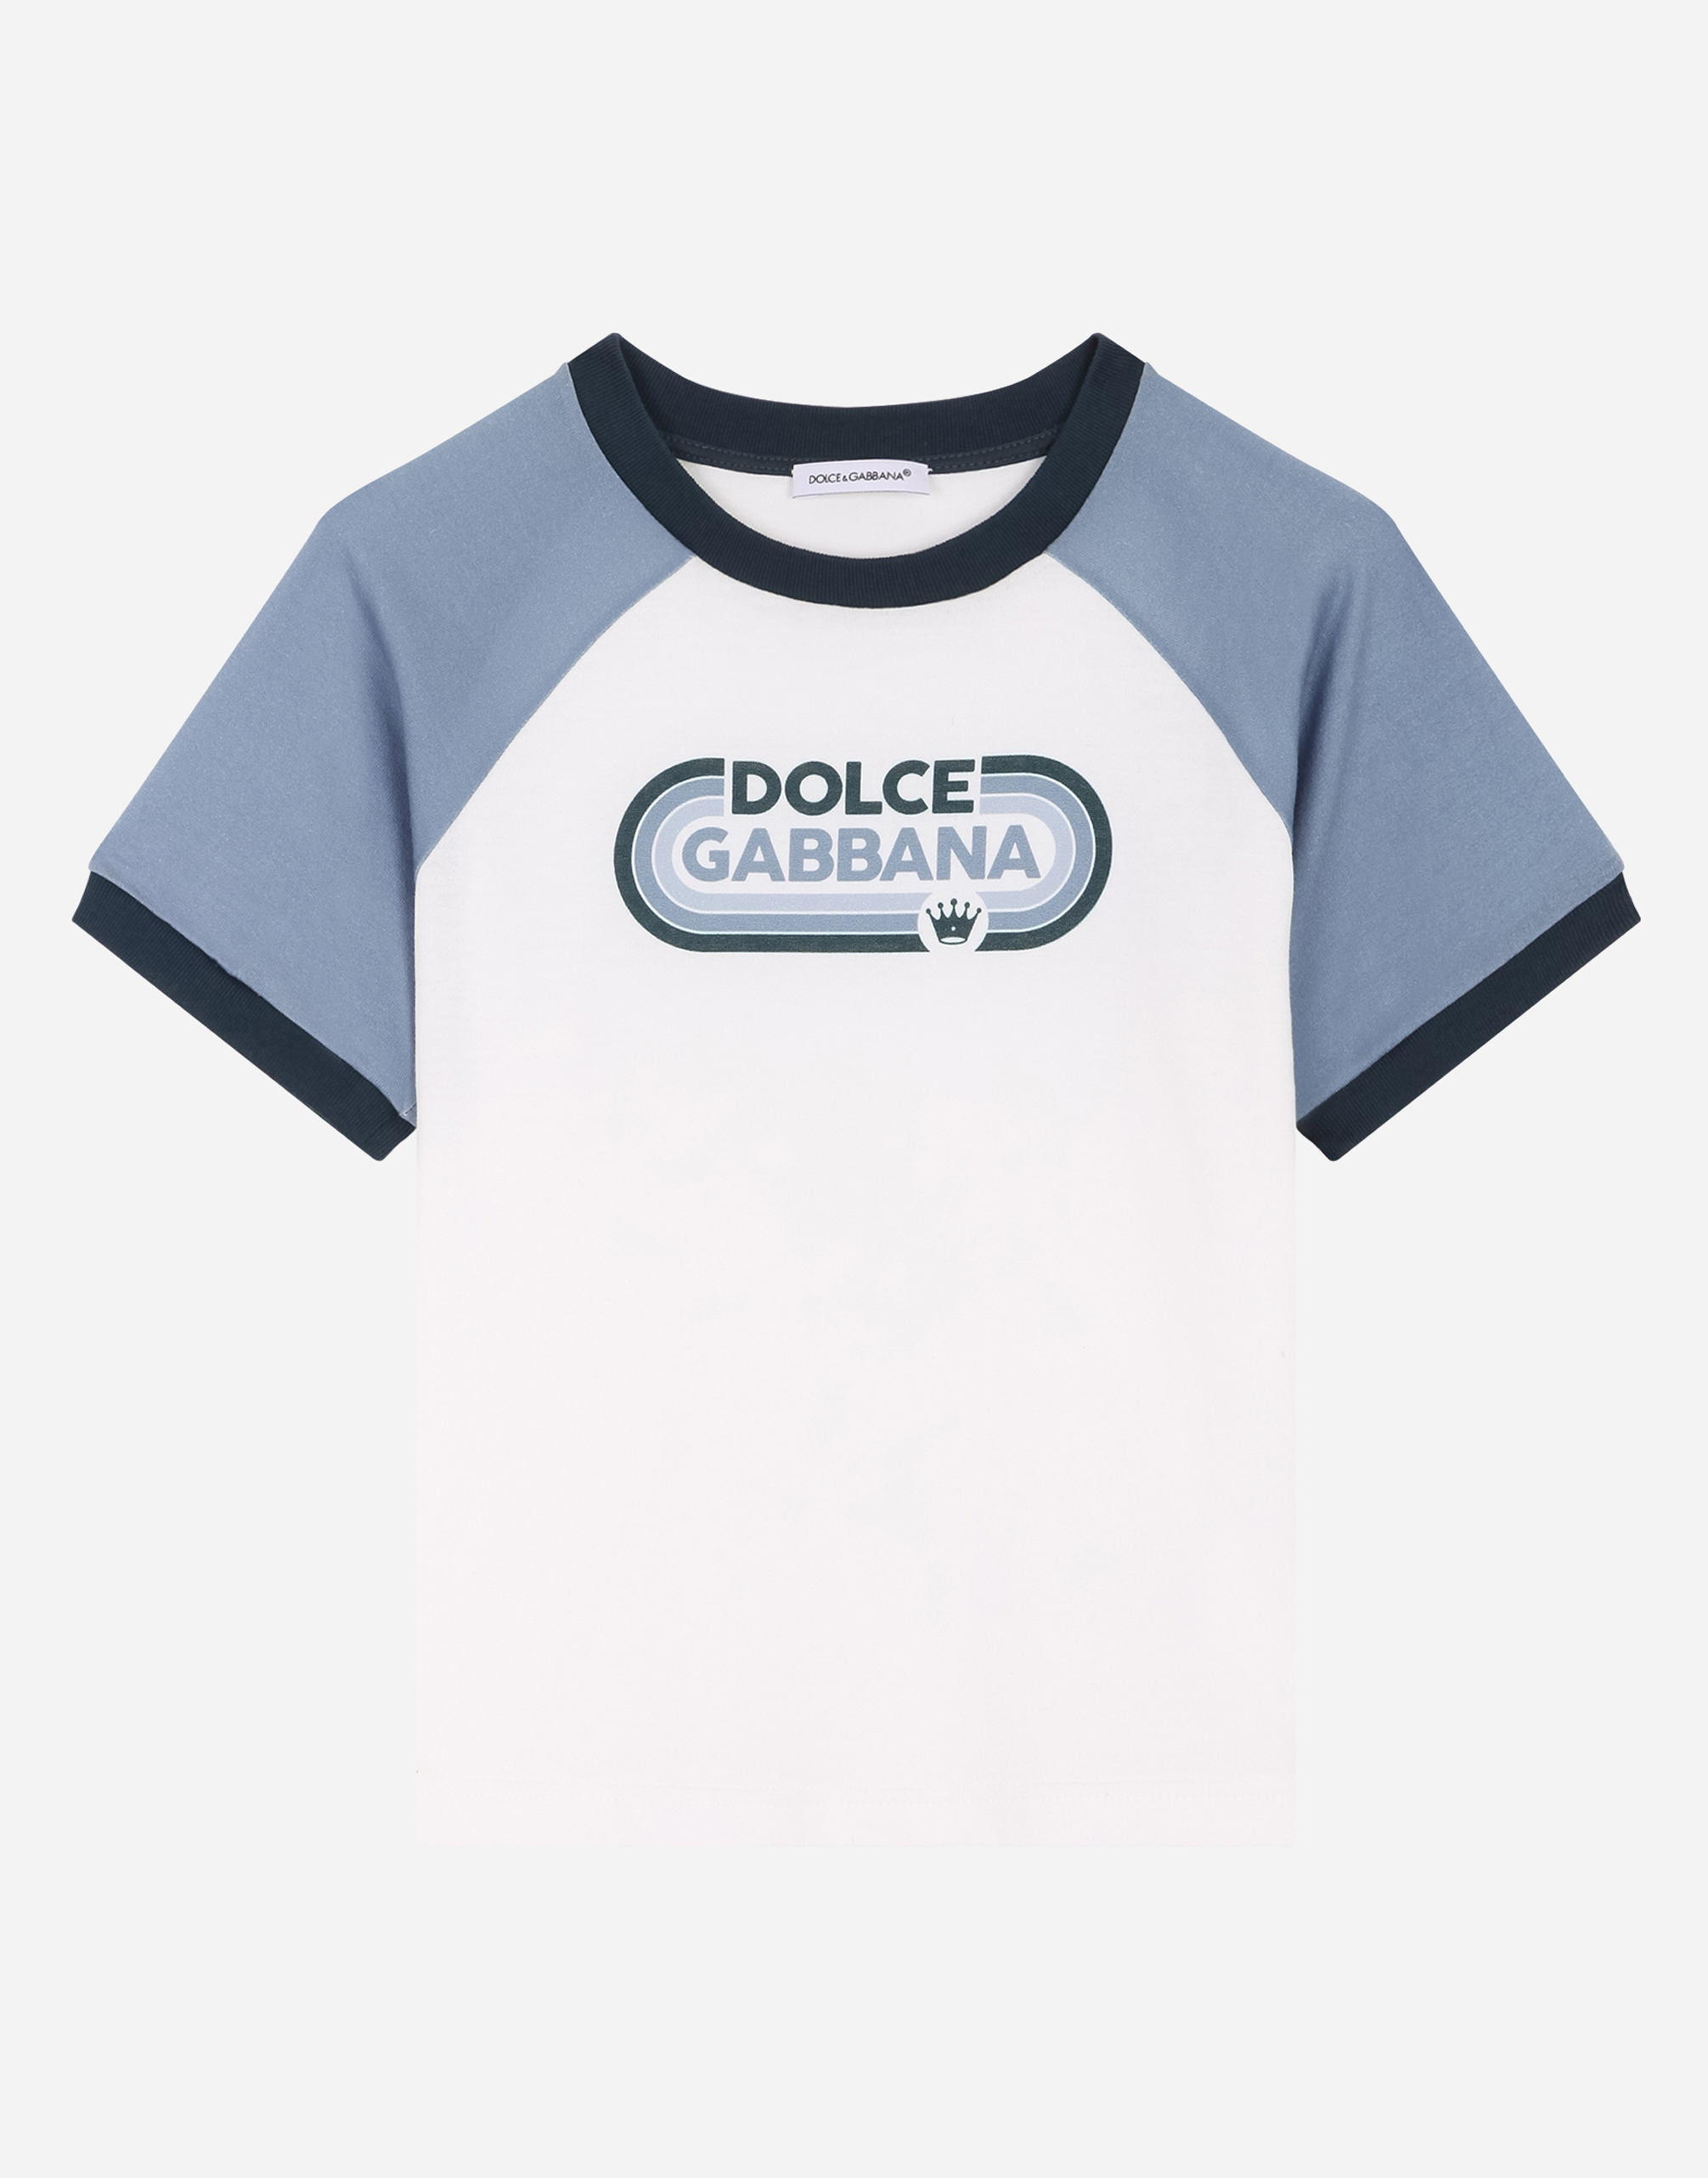 Dolce & Gabbana Kids' Two-tone Jersey T-shirt With Dolce&gabbana Print